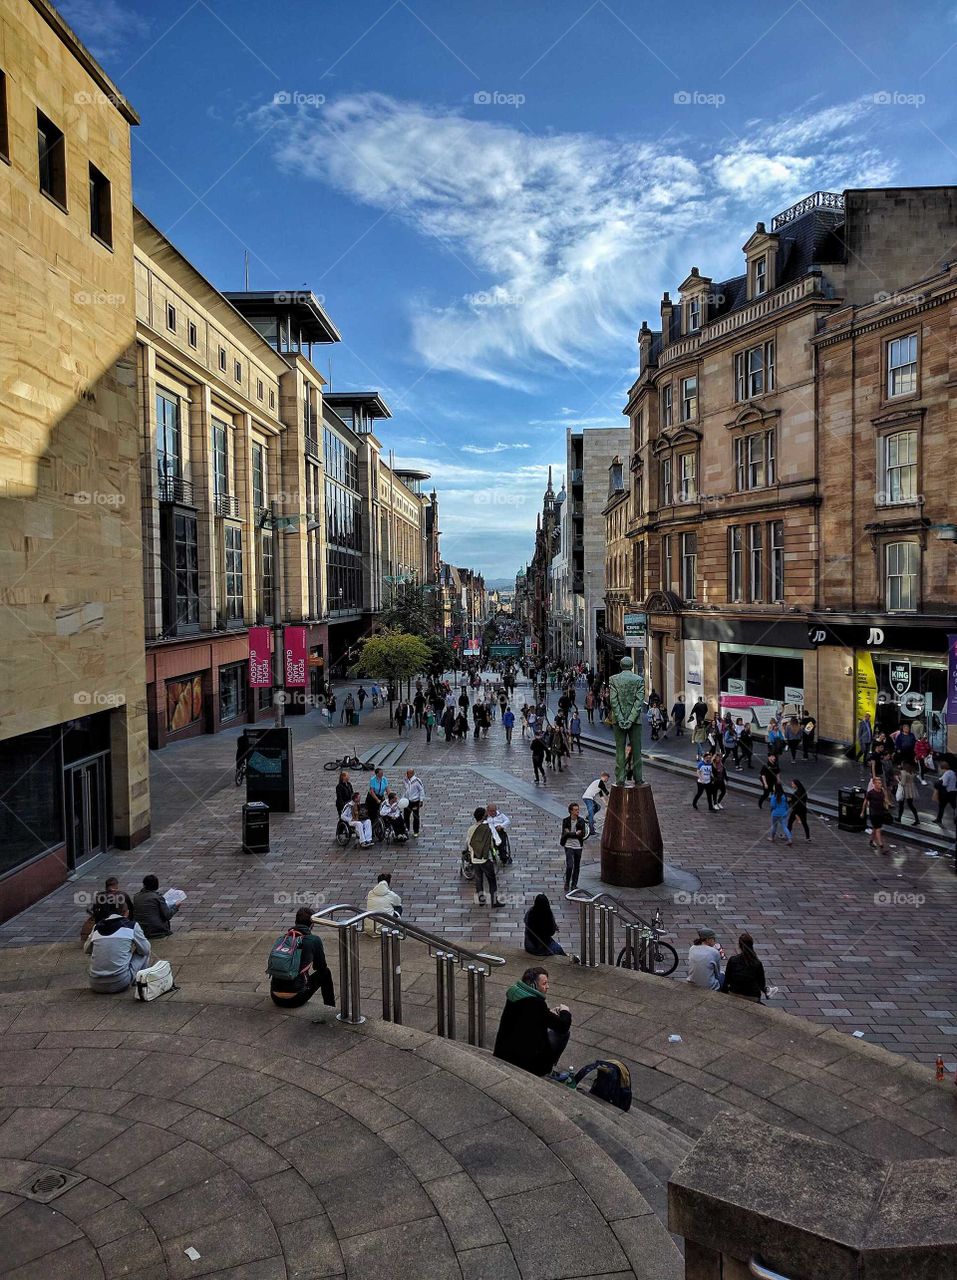 The Long Shopping Street - Buchanan Street, Glasgow